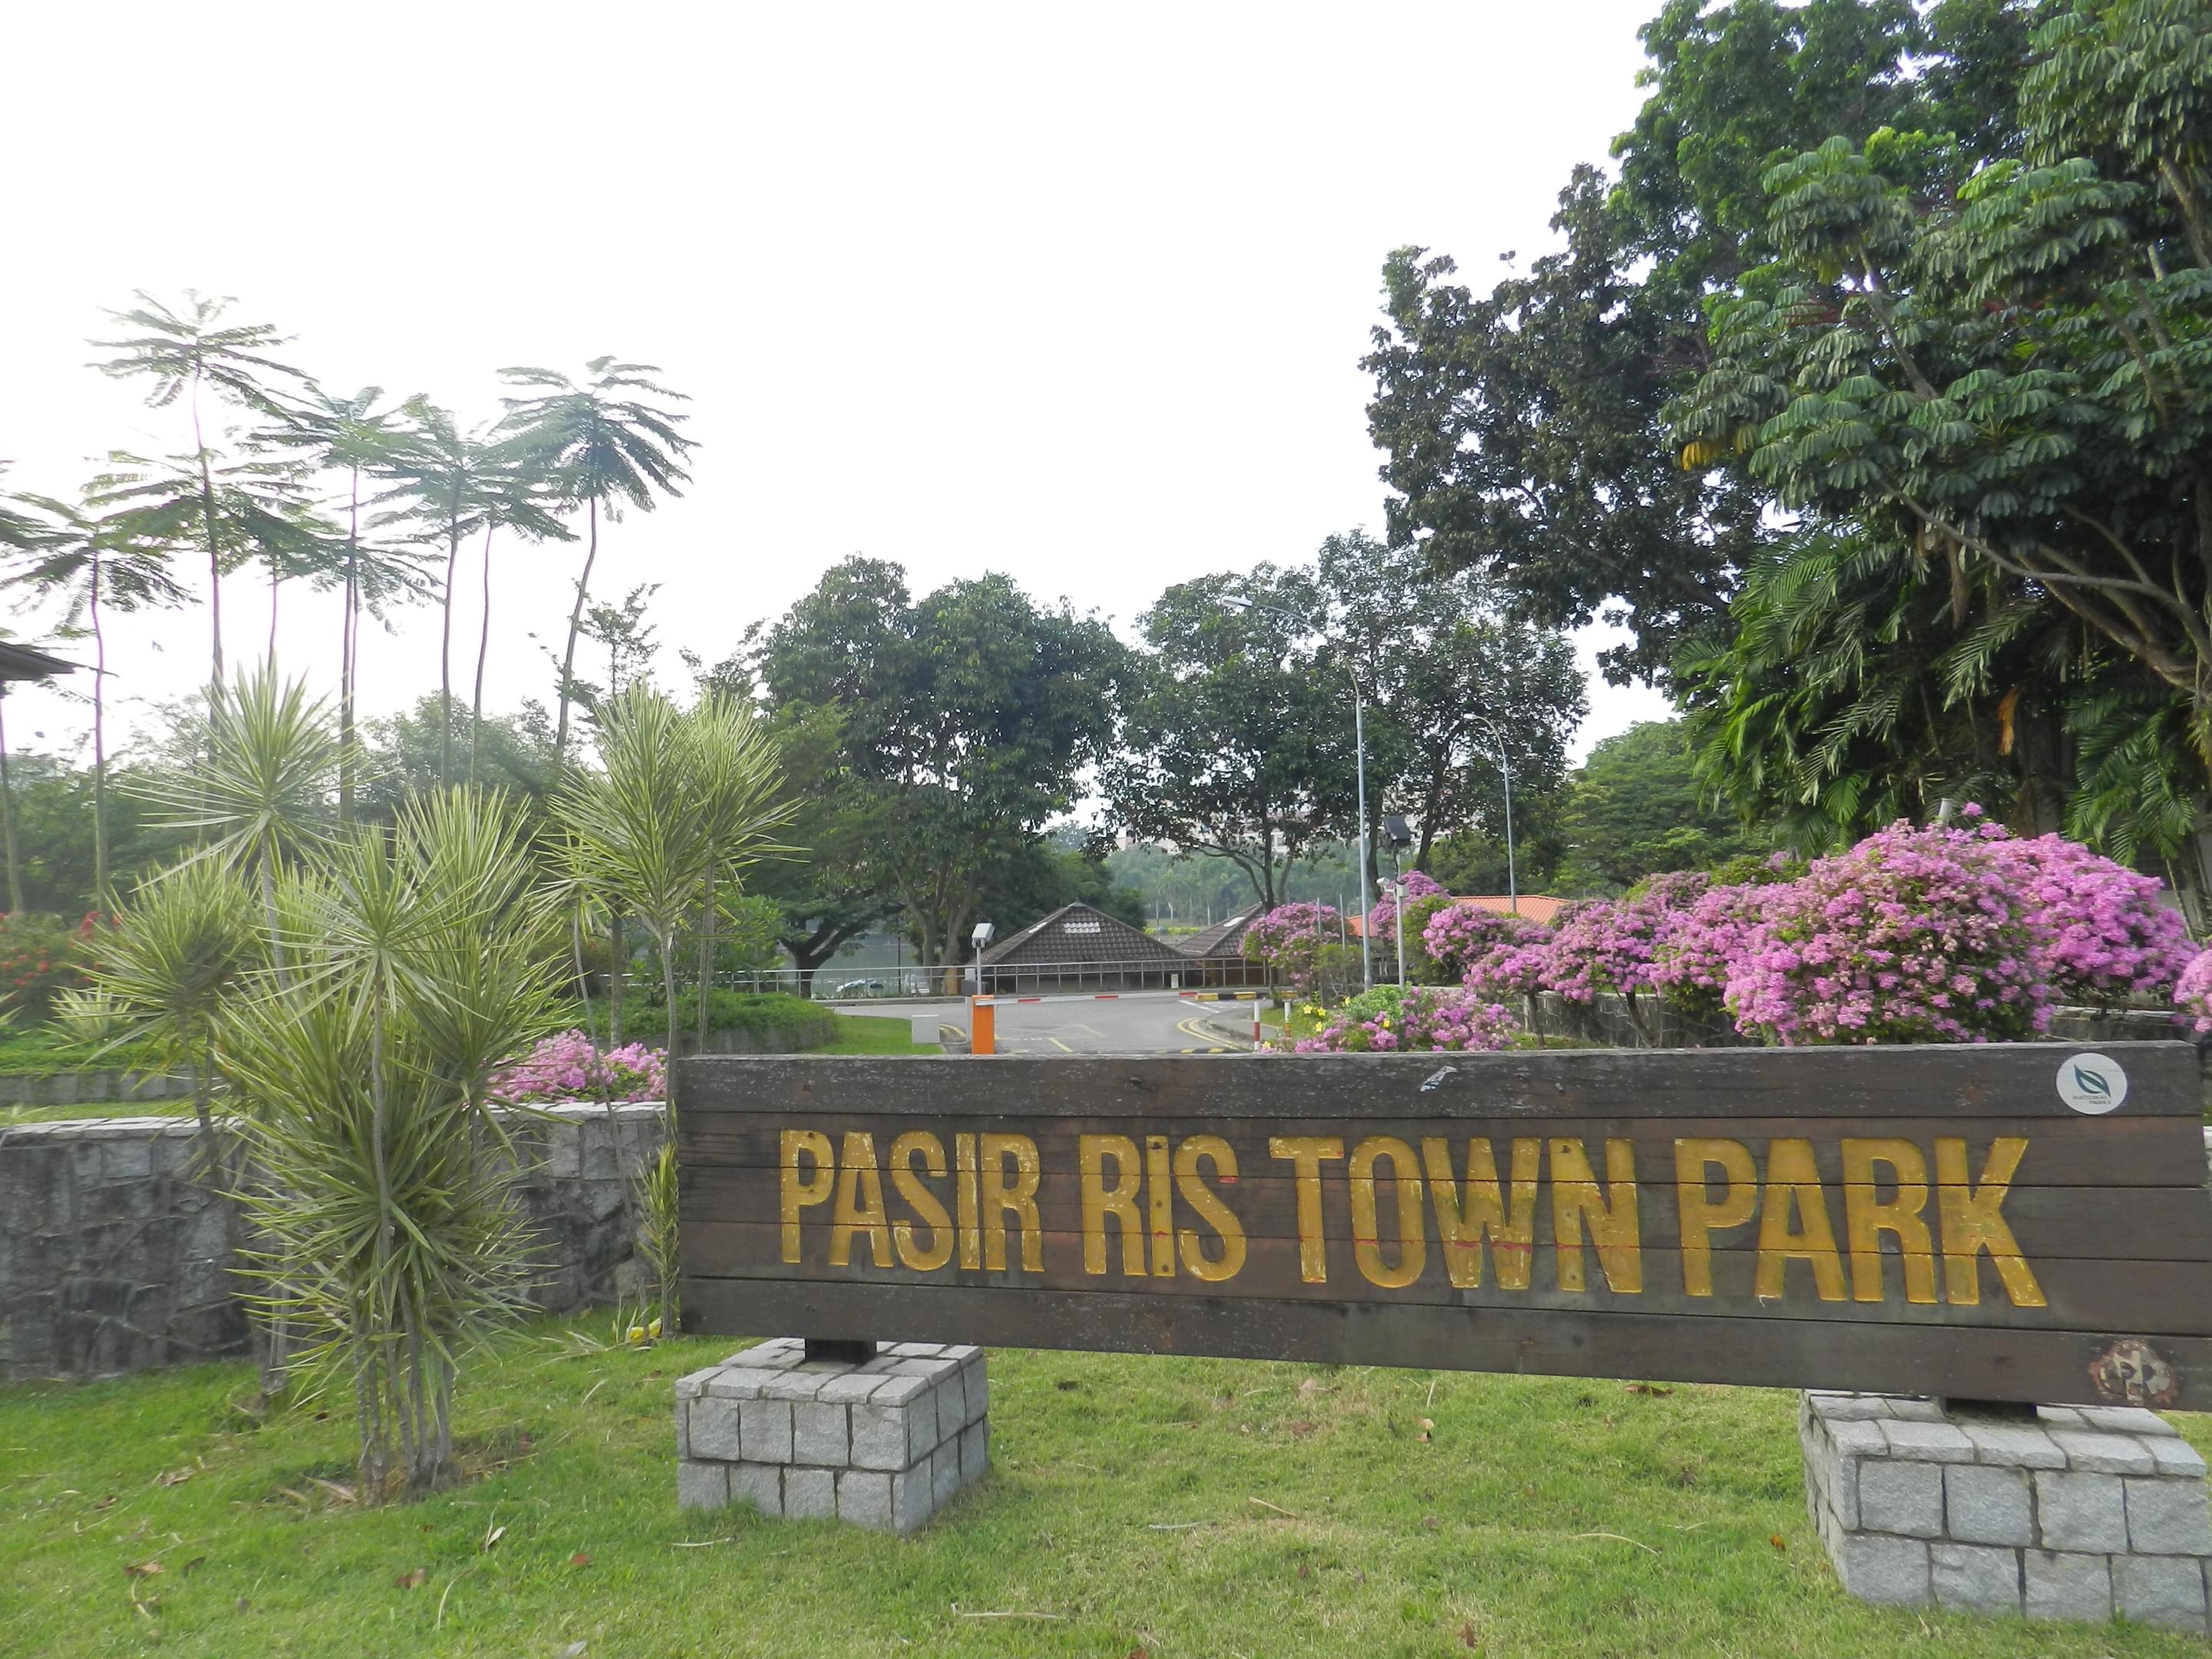 Pasir Ris Town Park Overview